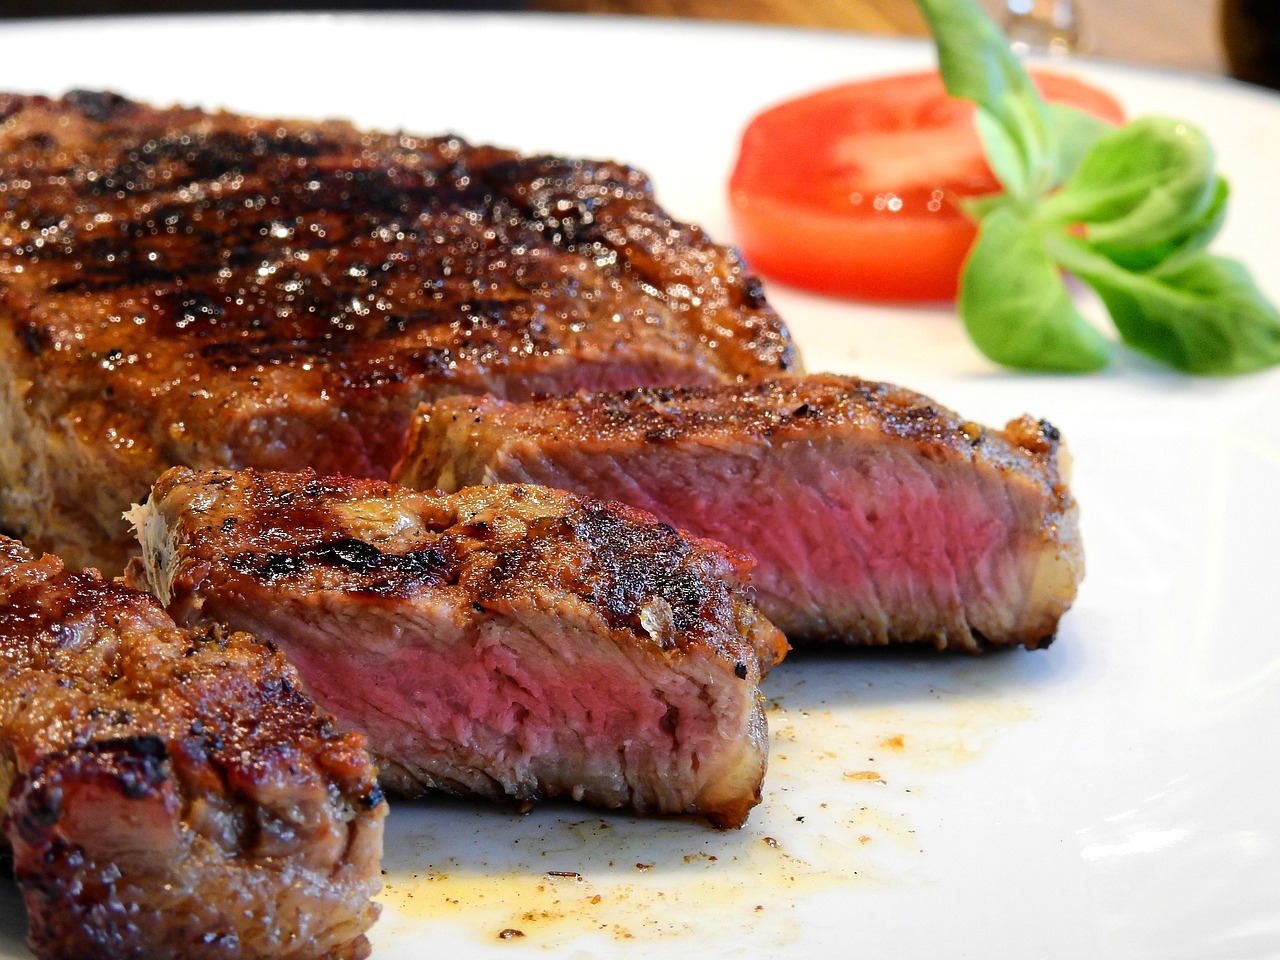 A steak upon a white plate